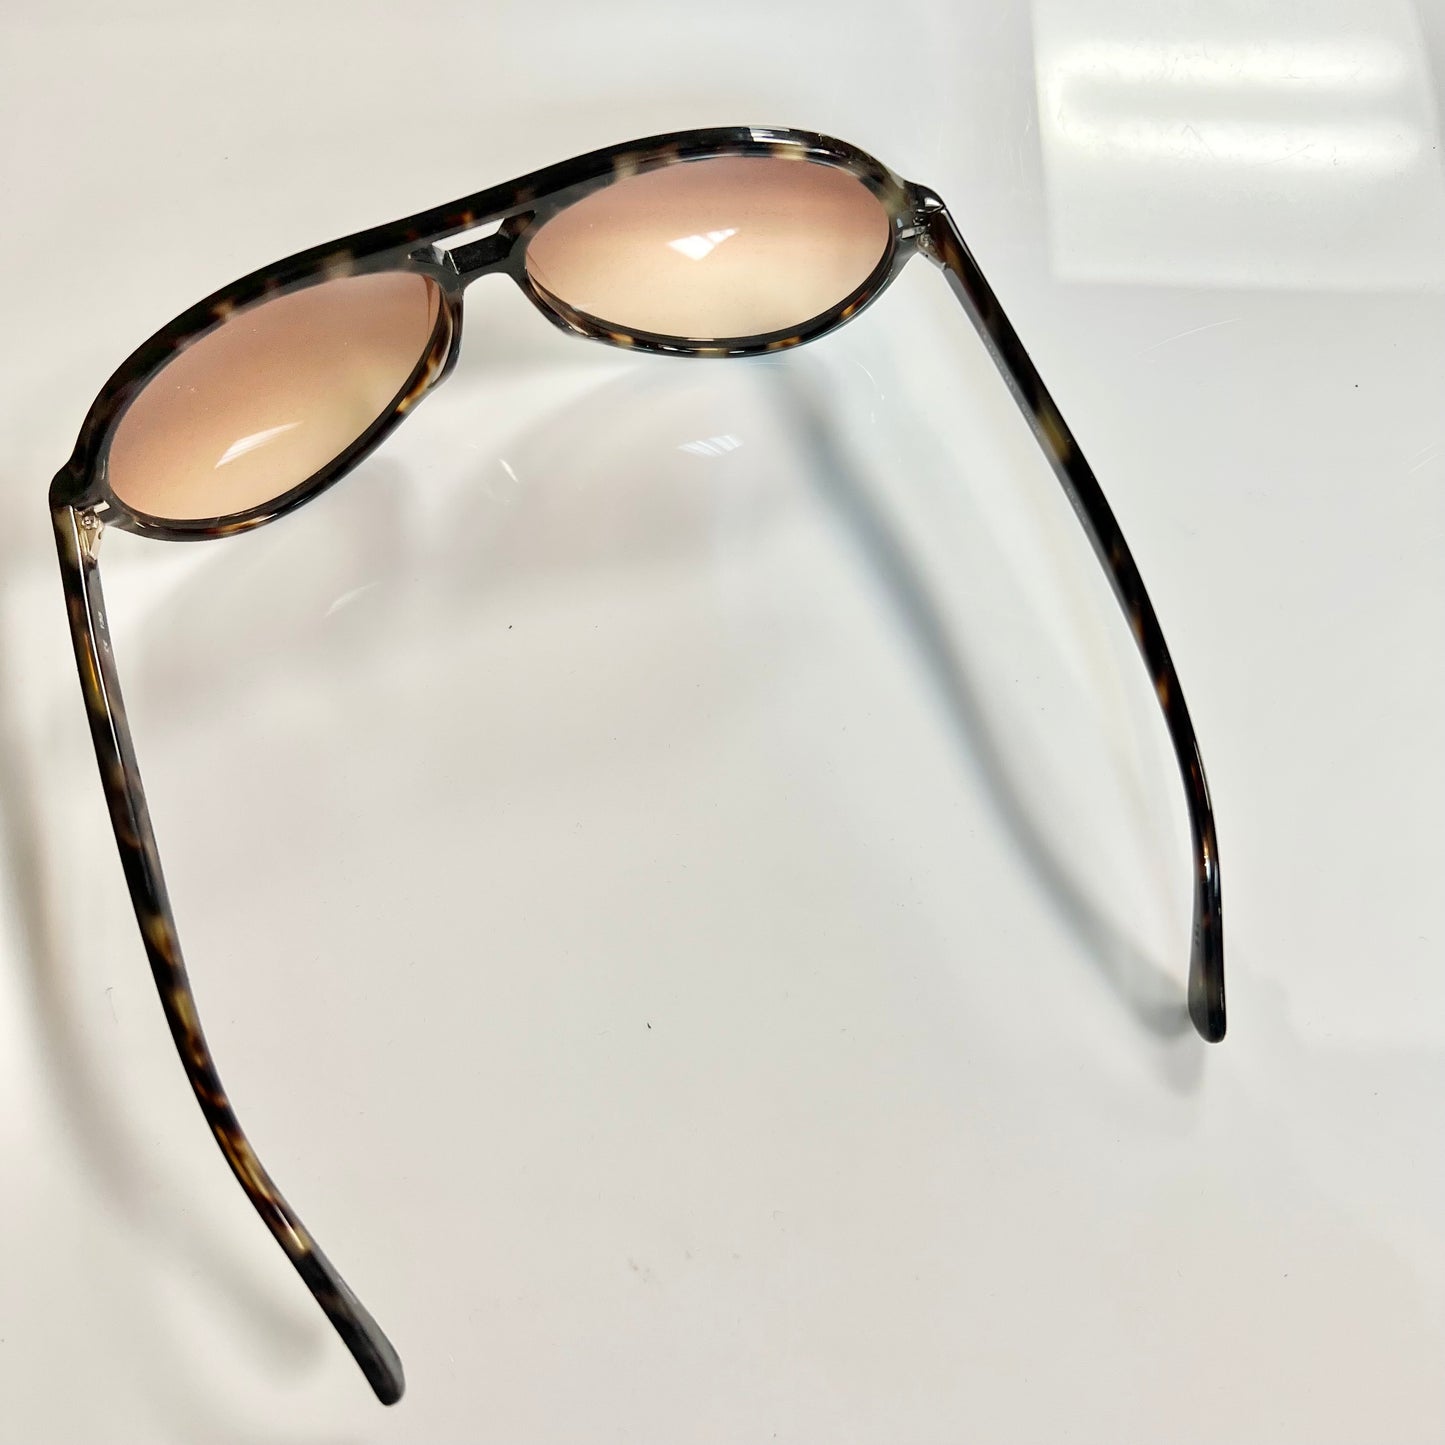 Sunglasses Designer By Coach